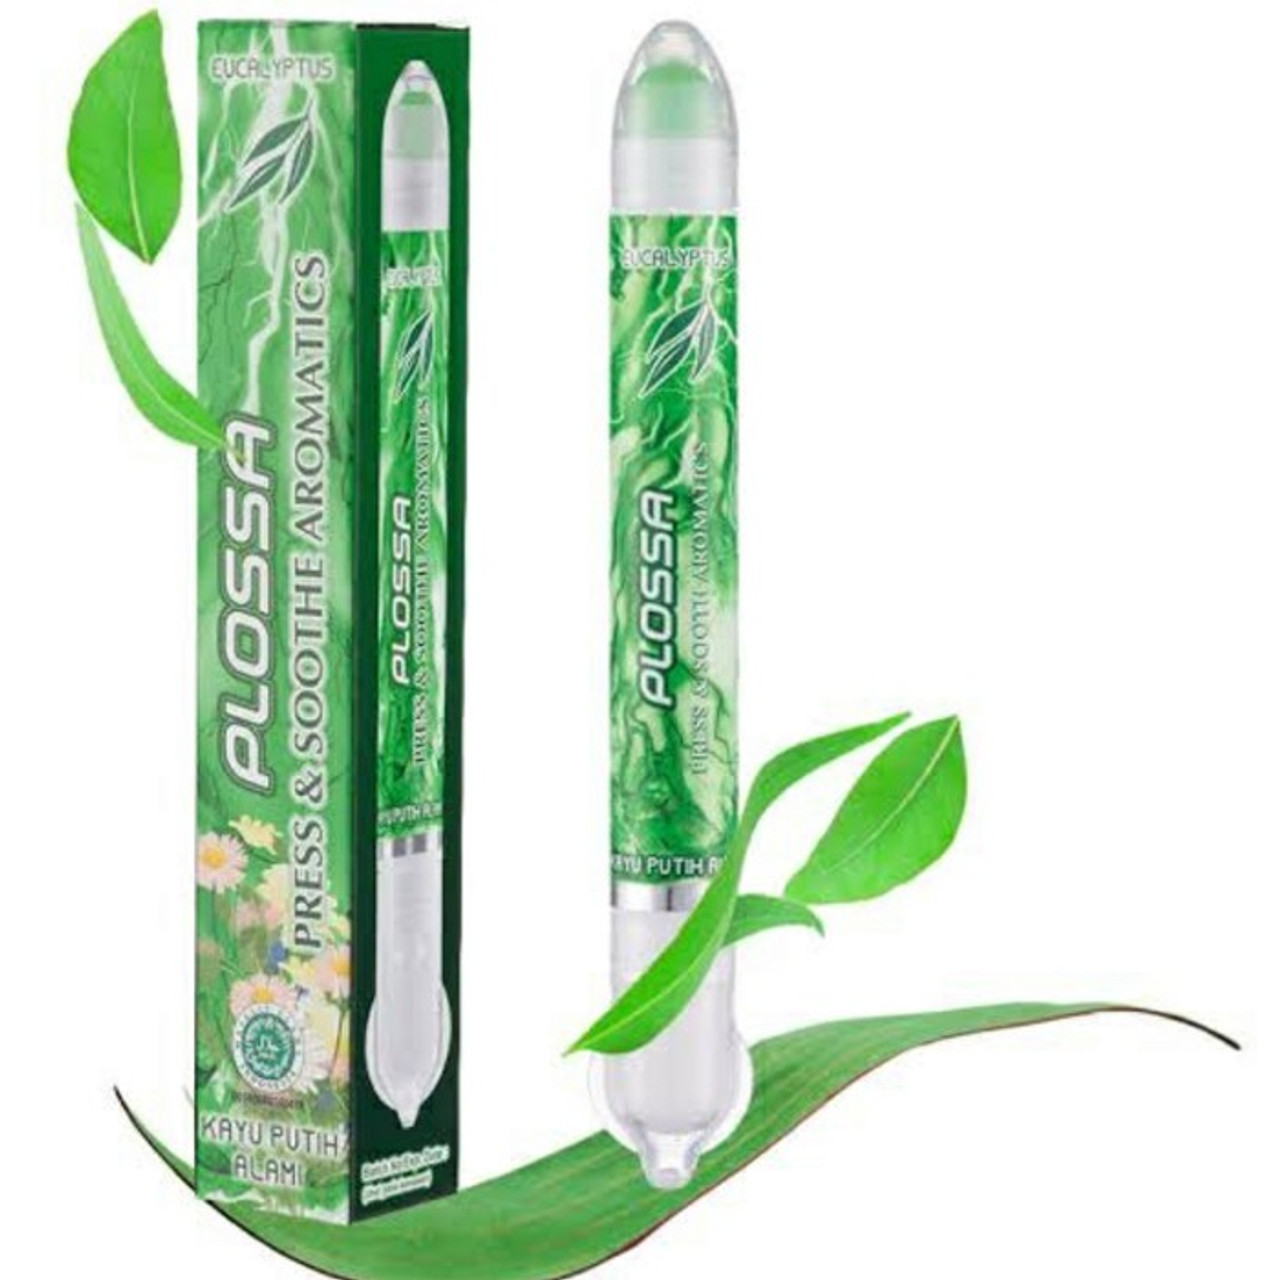 Plossa Press & Sooth Aromatic Eucalyptus, 8 ml